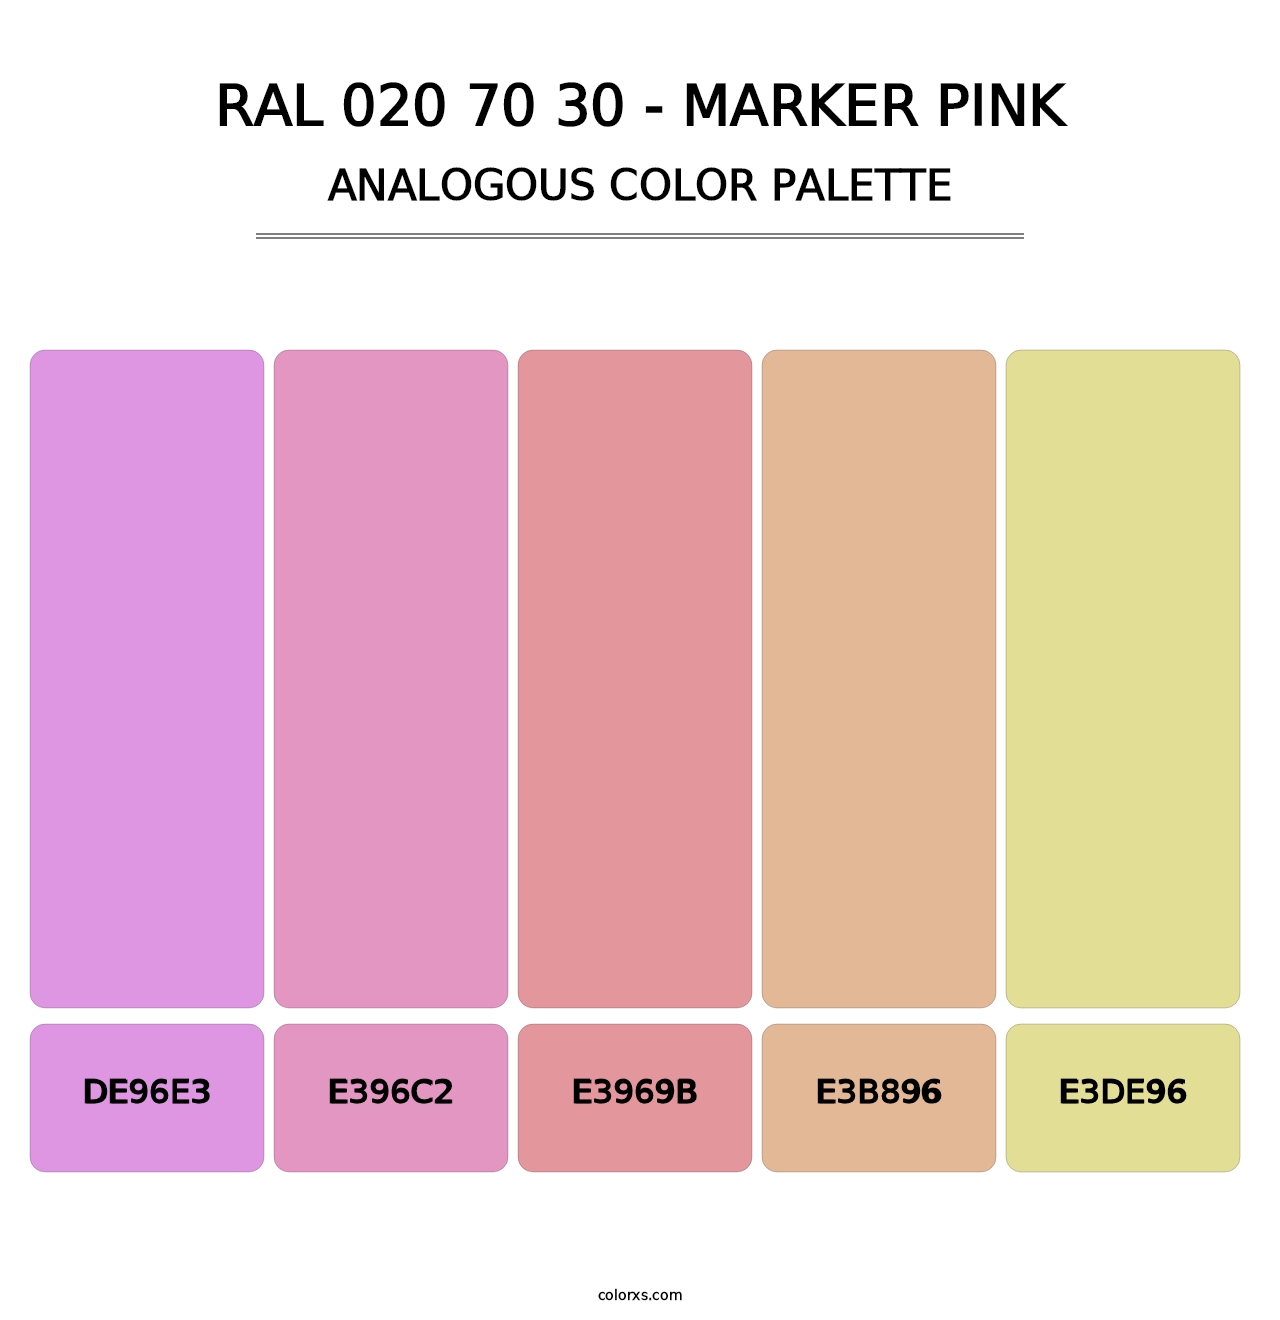 RAL 020 70 30 - Marker Pink - Analogous Color Palette